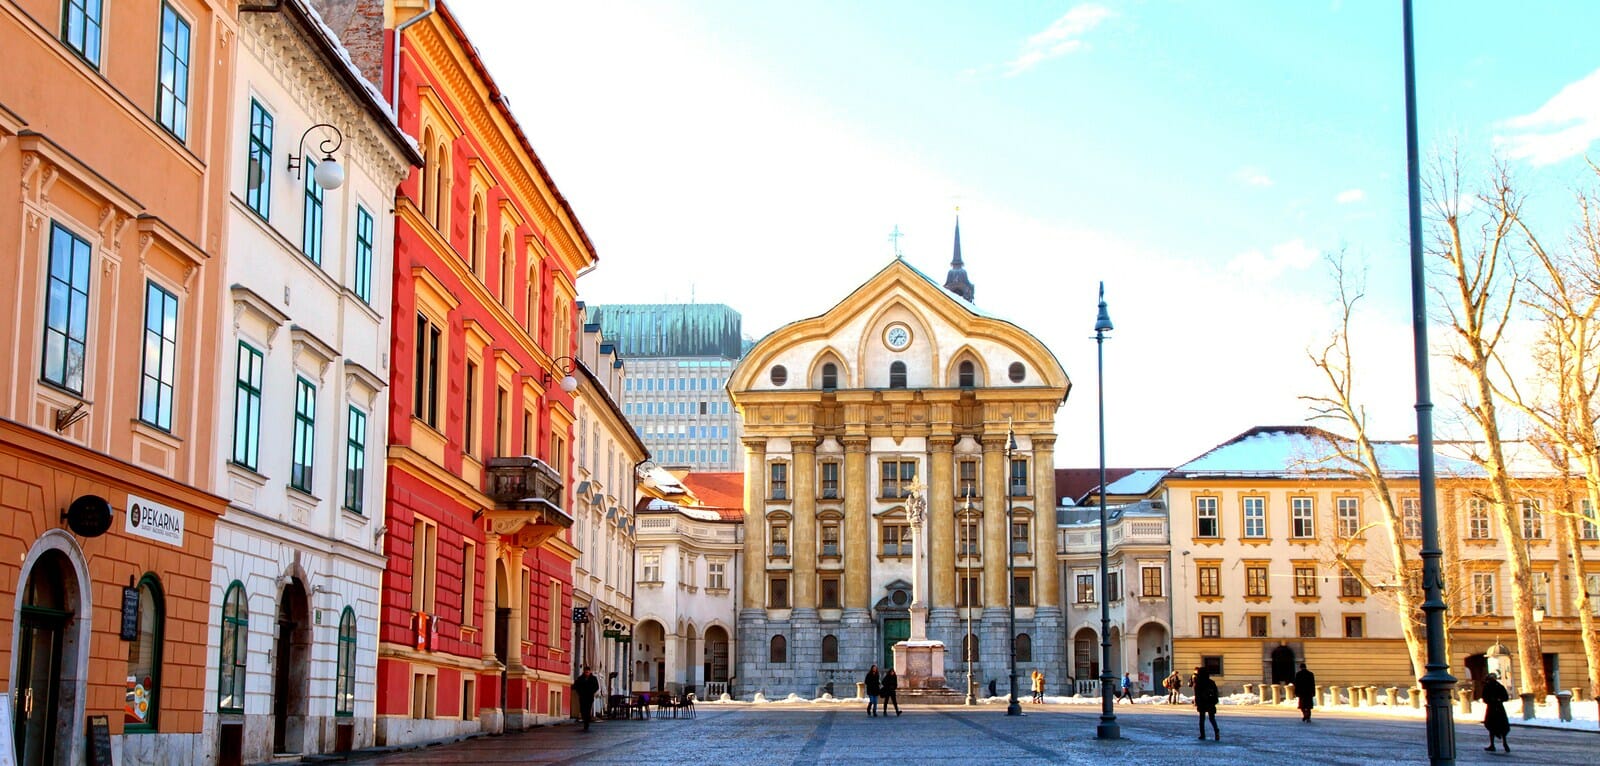 Ljubljana, Slovenia ranks high for the Europe on a budget 